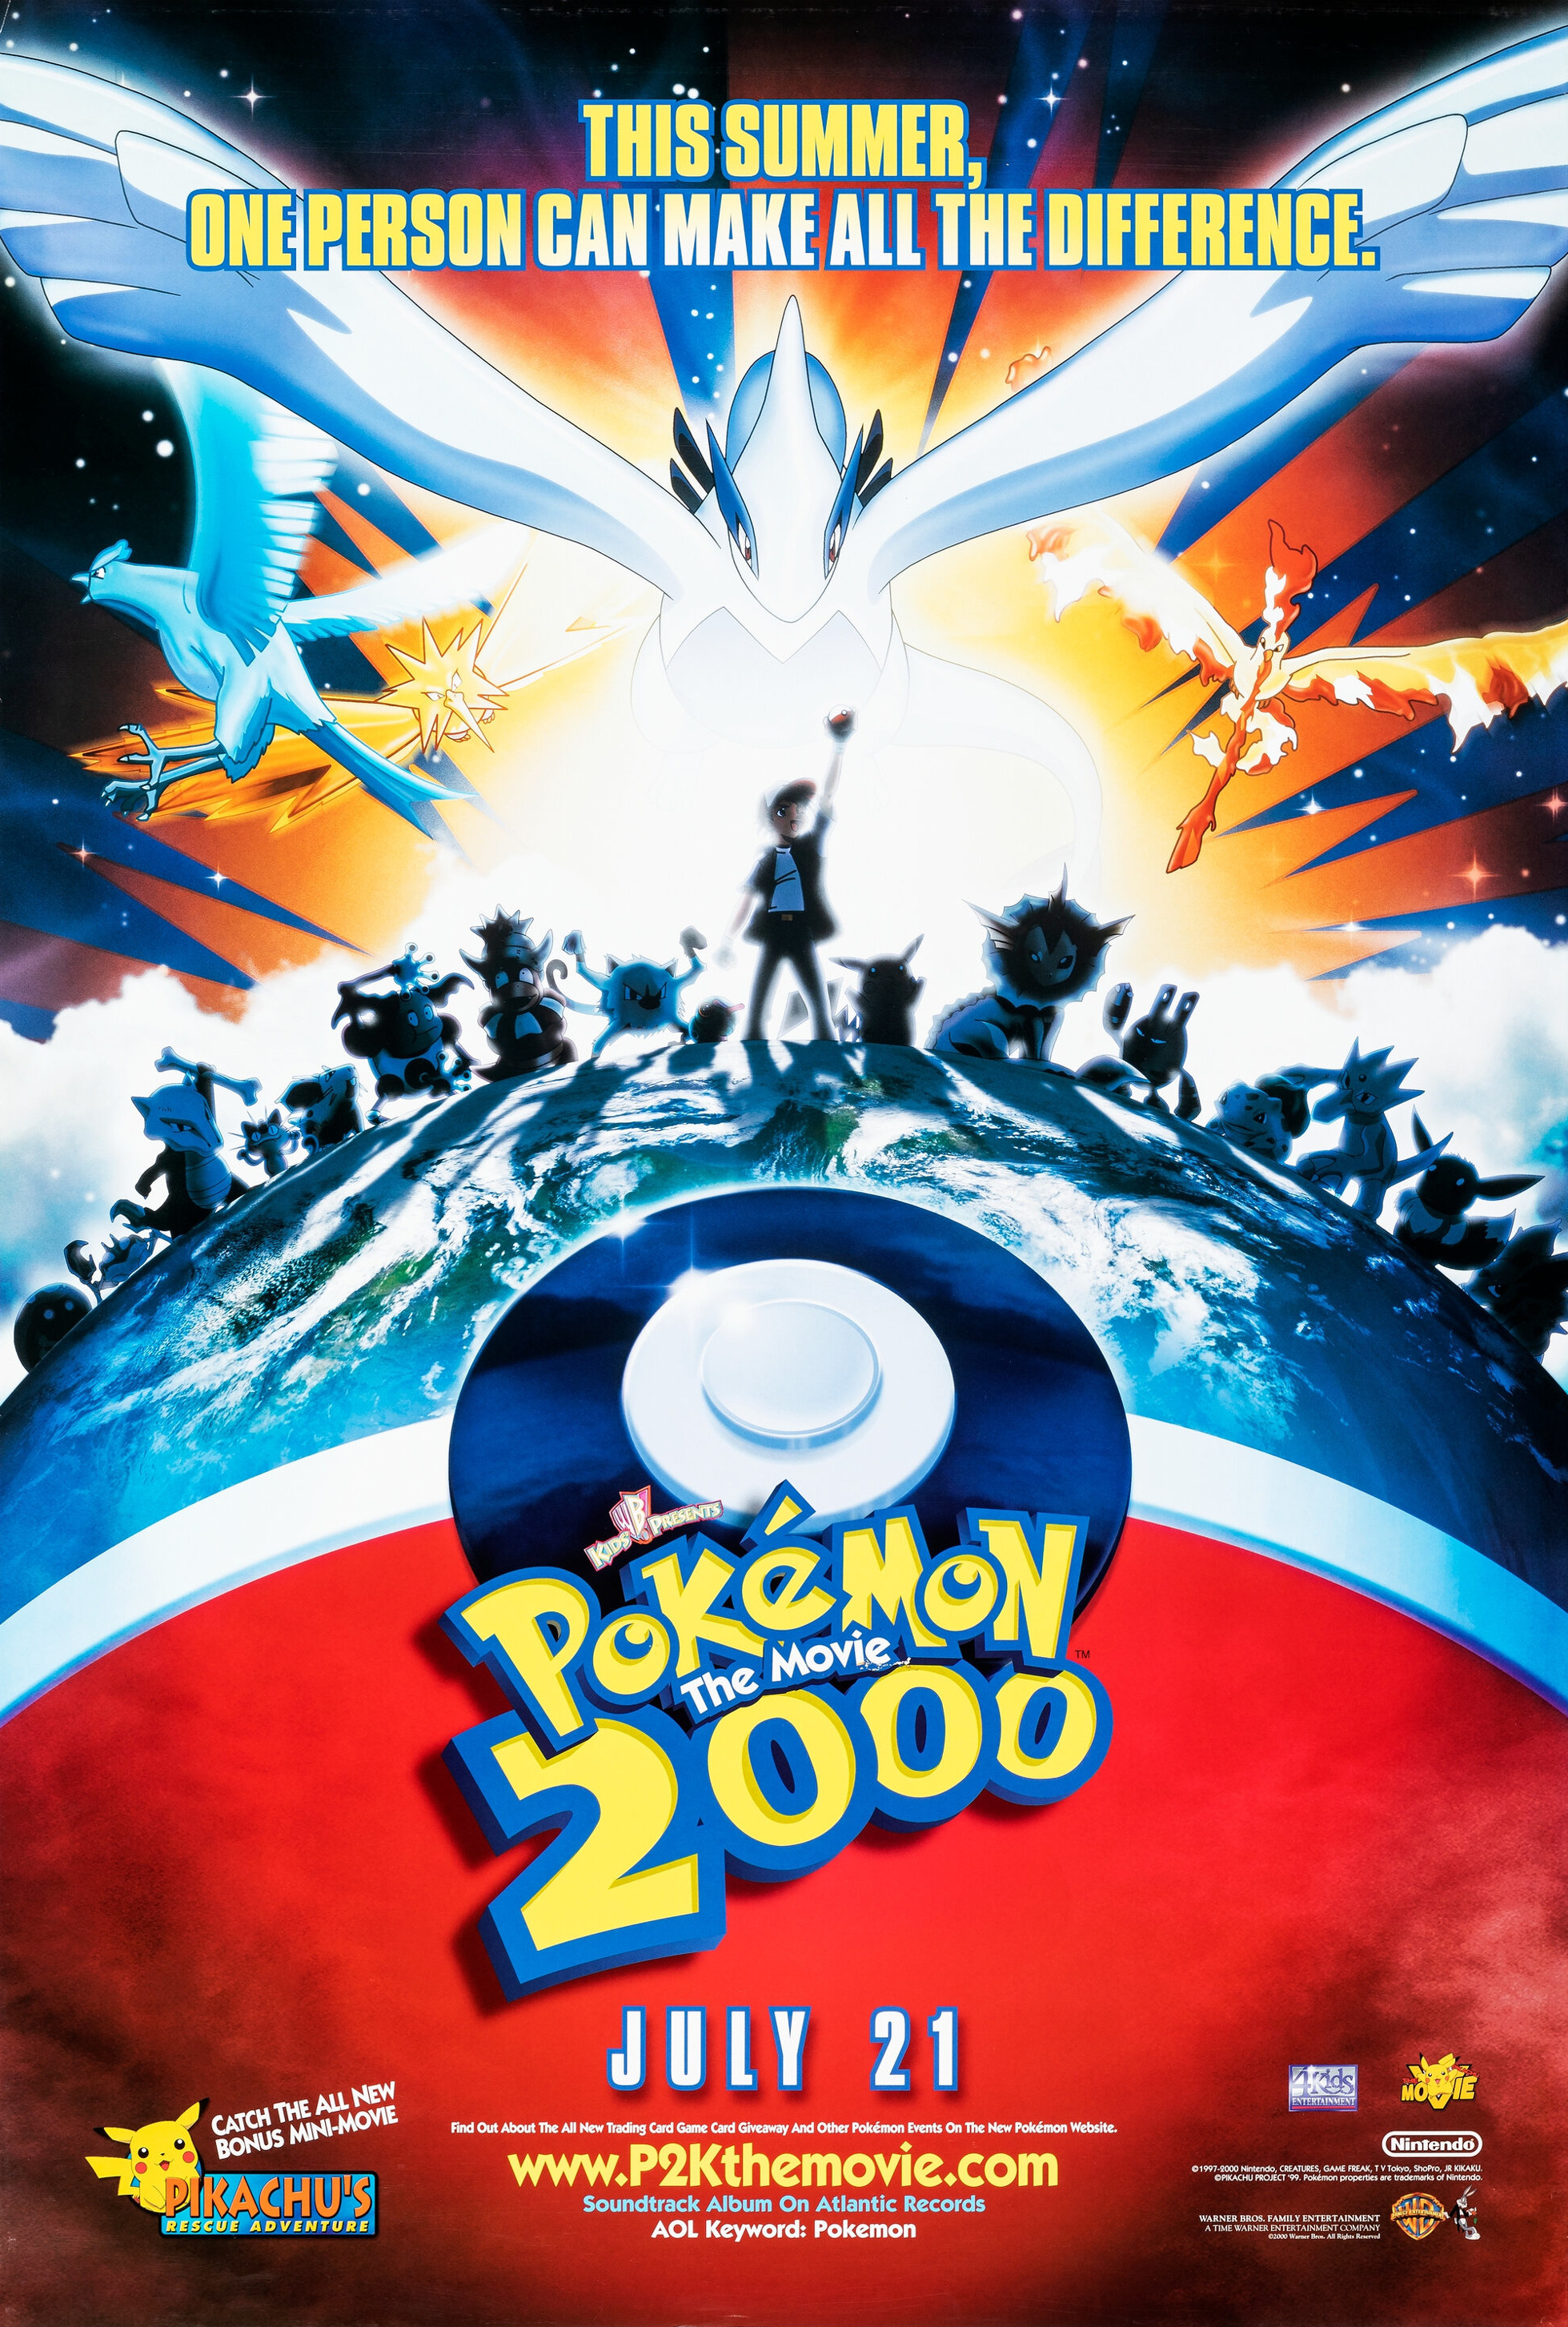 Mega Sized Movie Poster Image for Pokemon 2000 